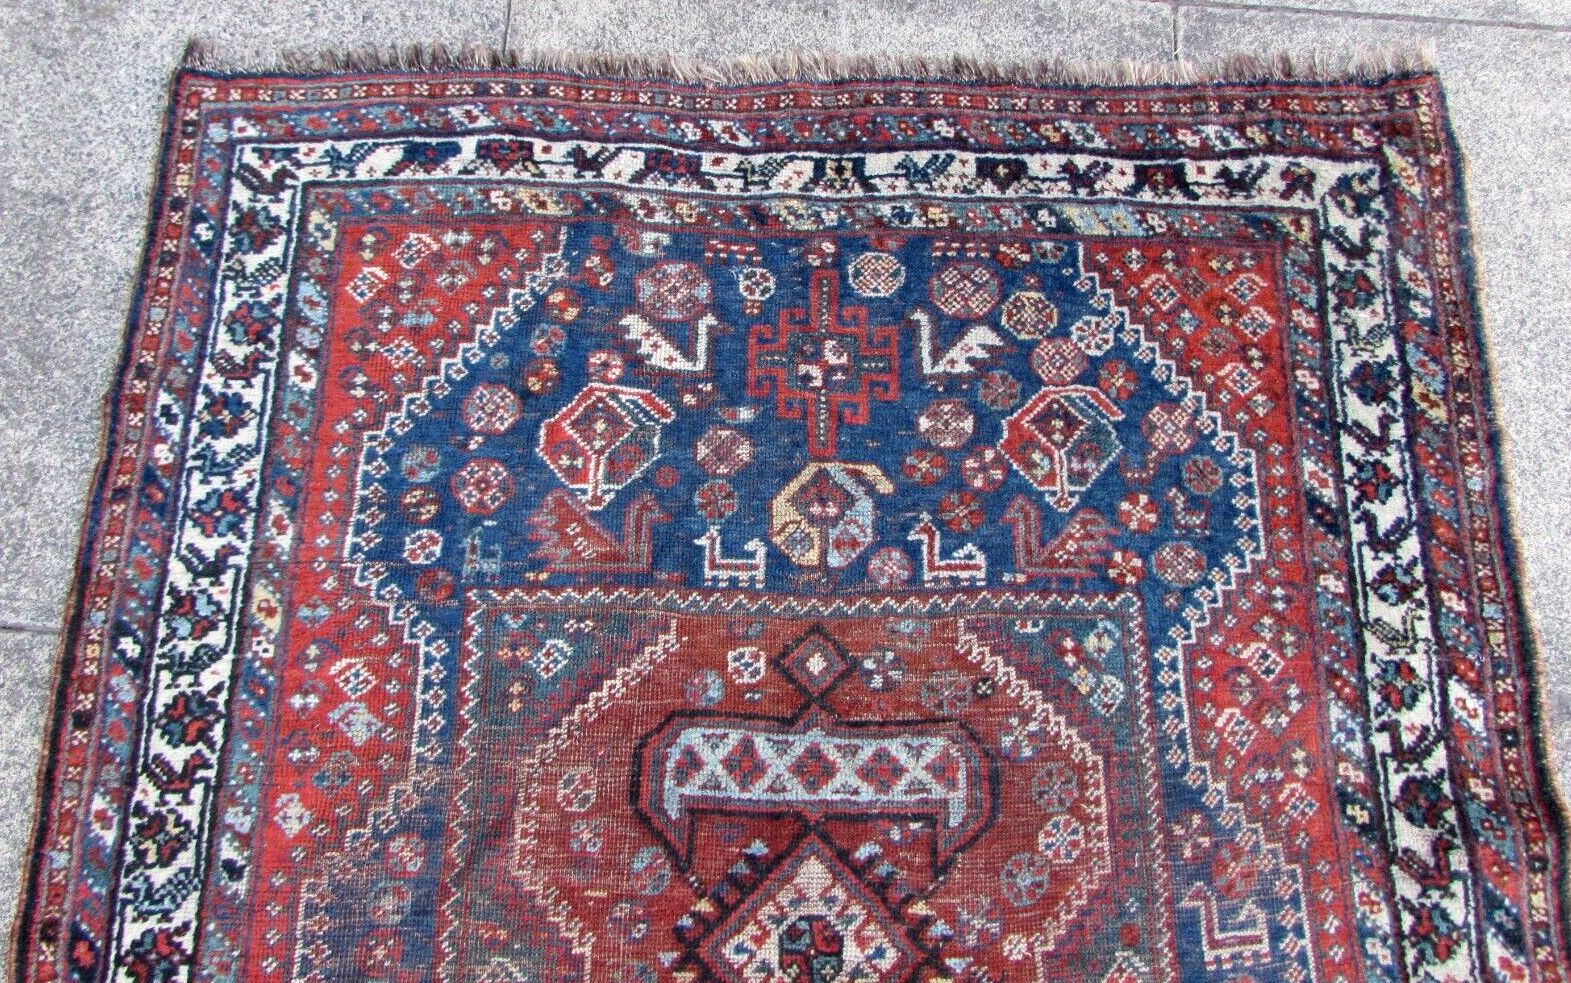 Close-up of decorative bird design on antique Persian Shiraz rug